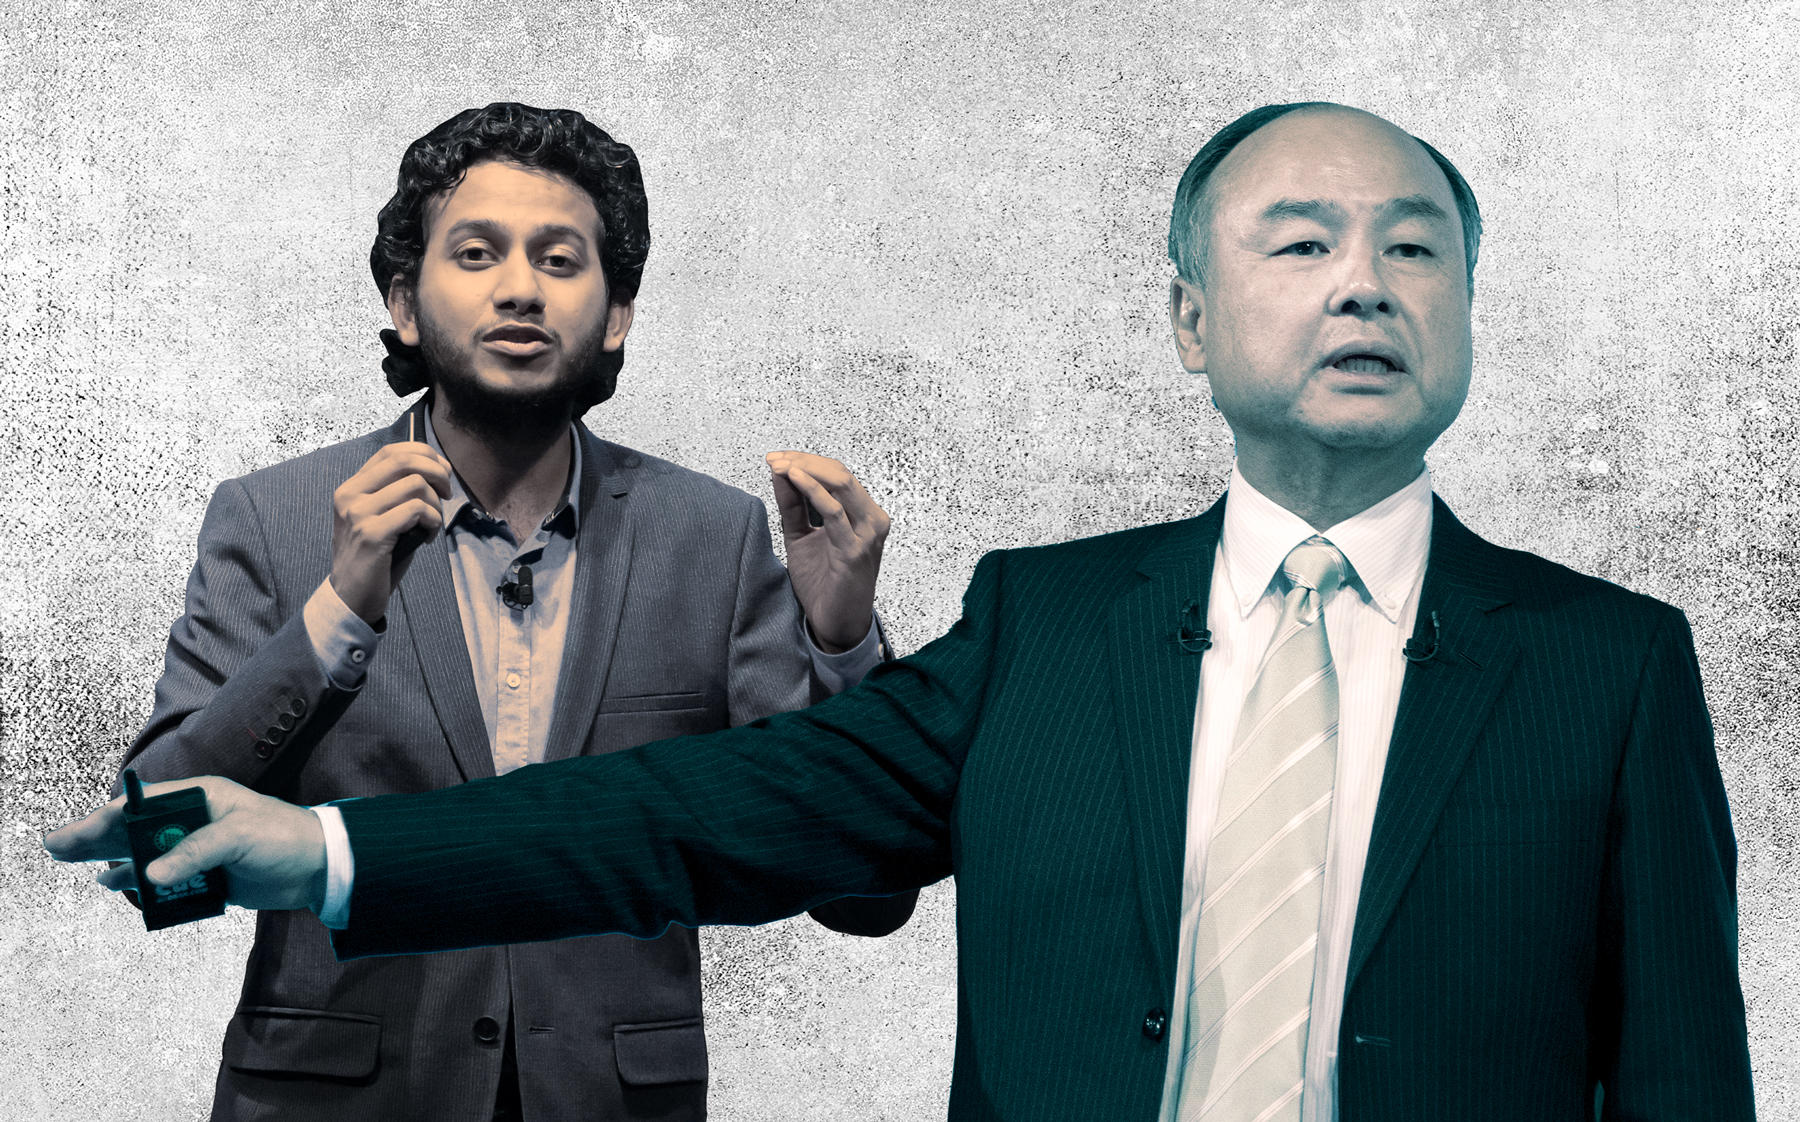 Oyo CEO Ritesh Agarwal and Softbank CEO Masayoshi Son (Credit: Getty Images)